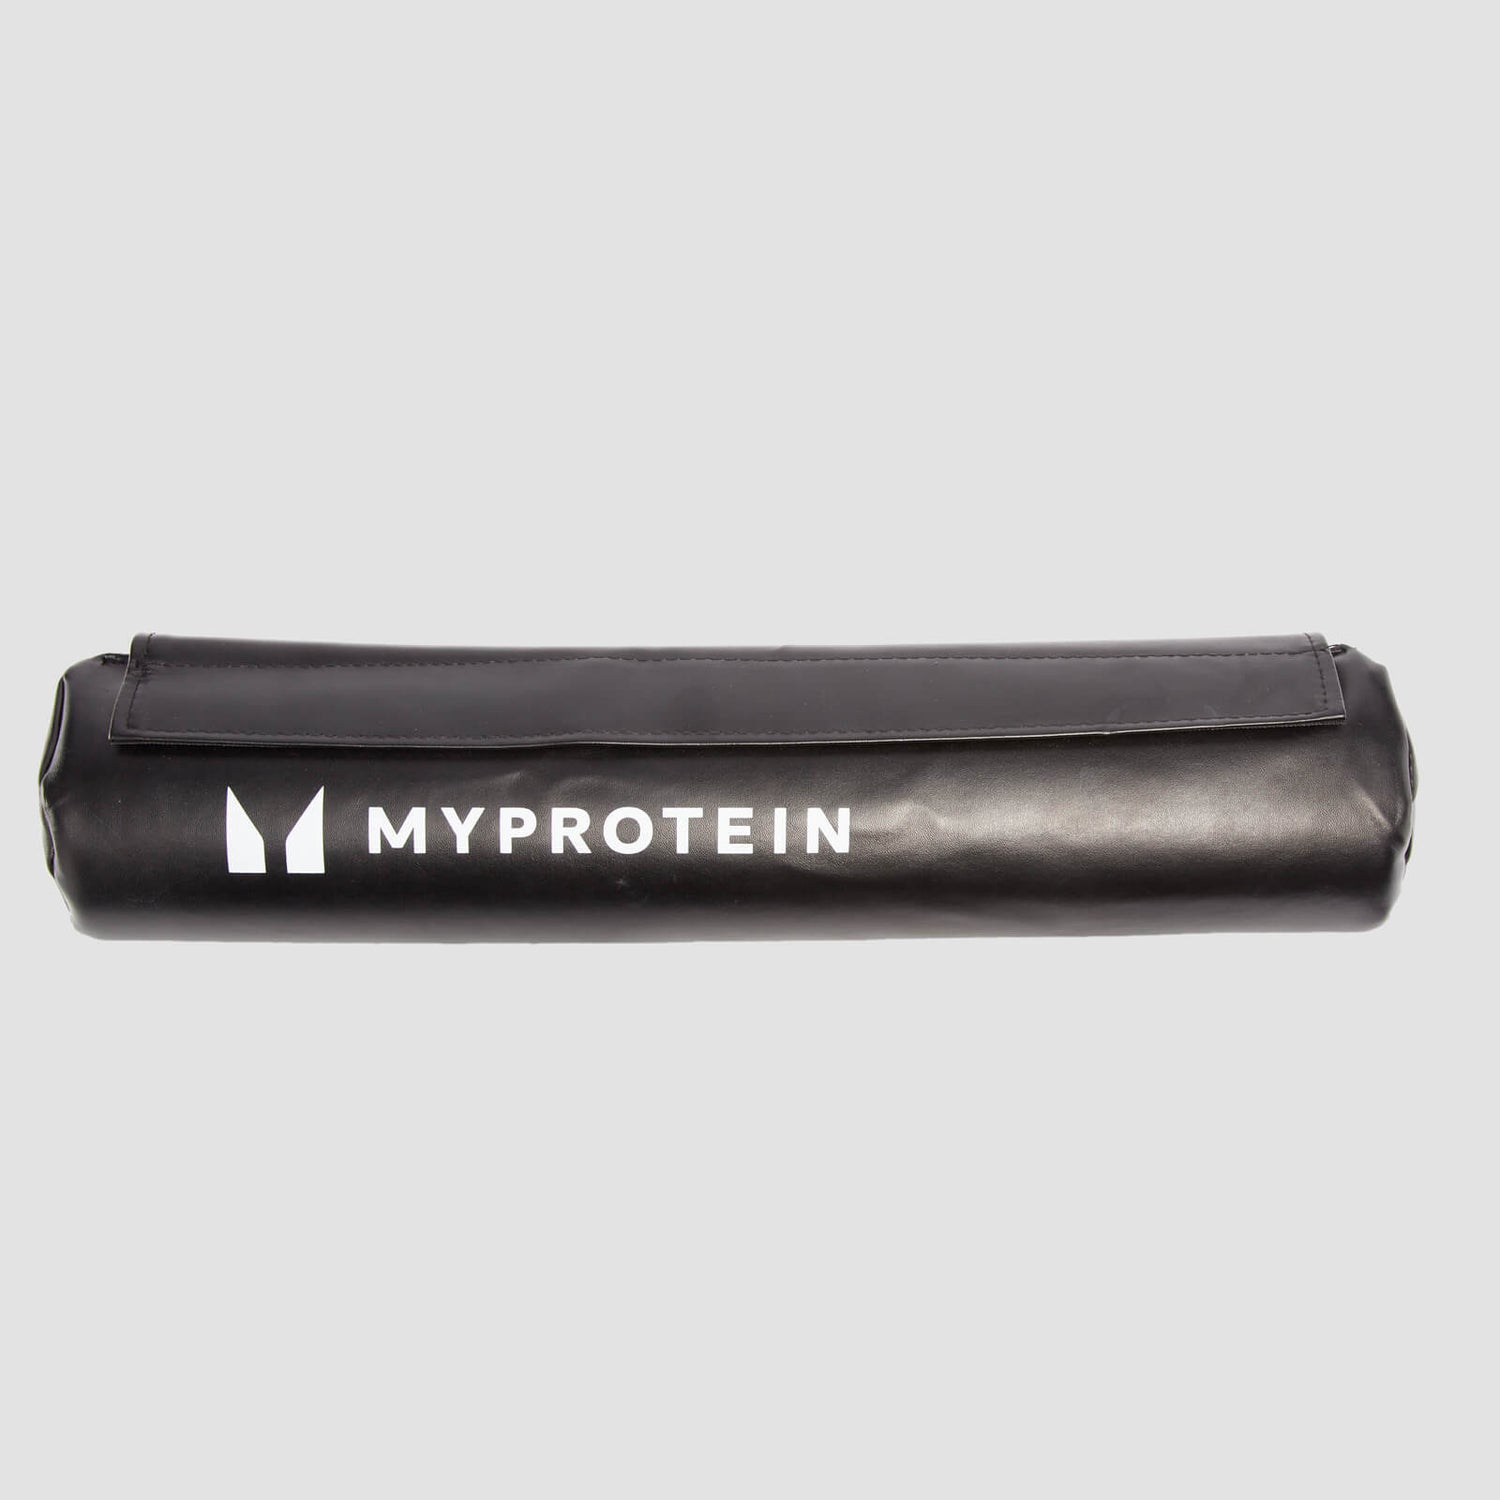 Myprotein Barbell Pad – Black